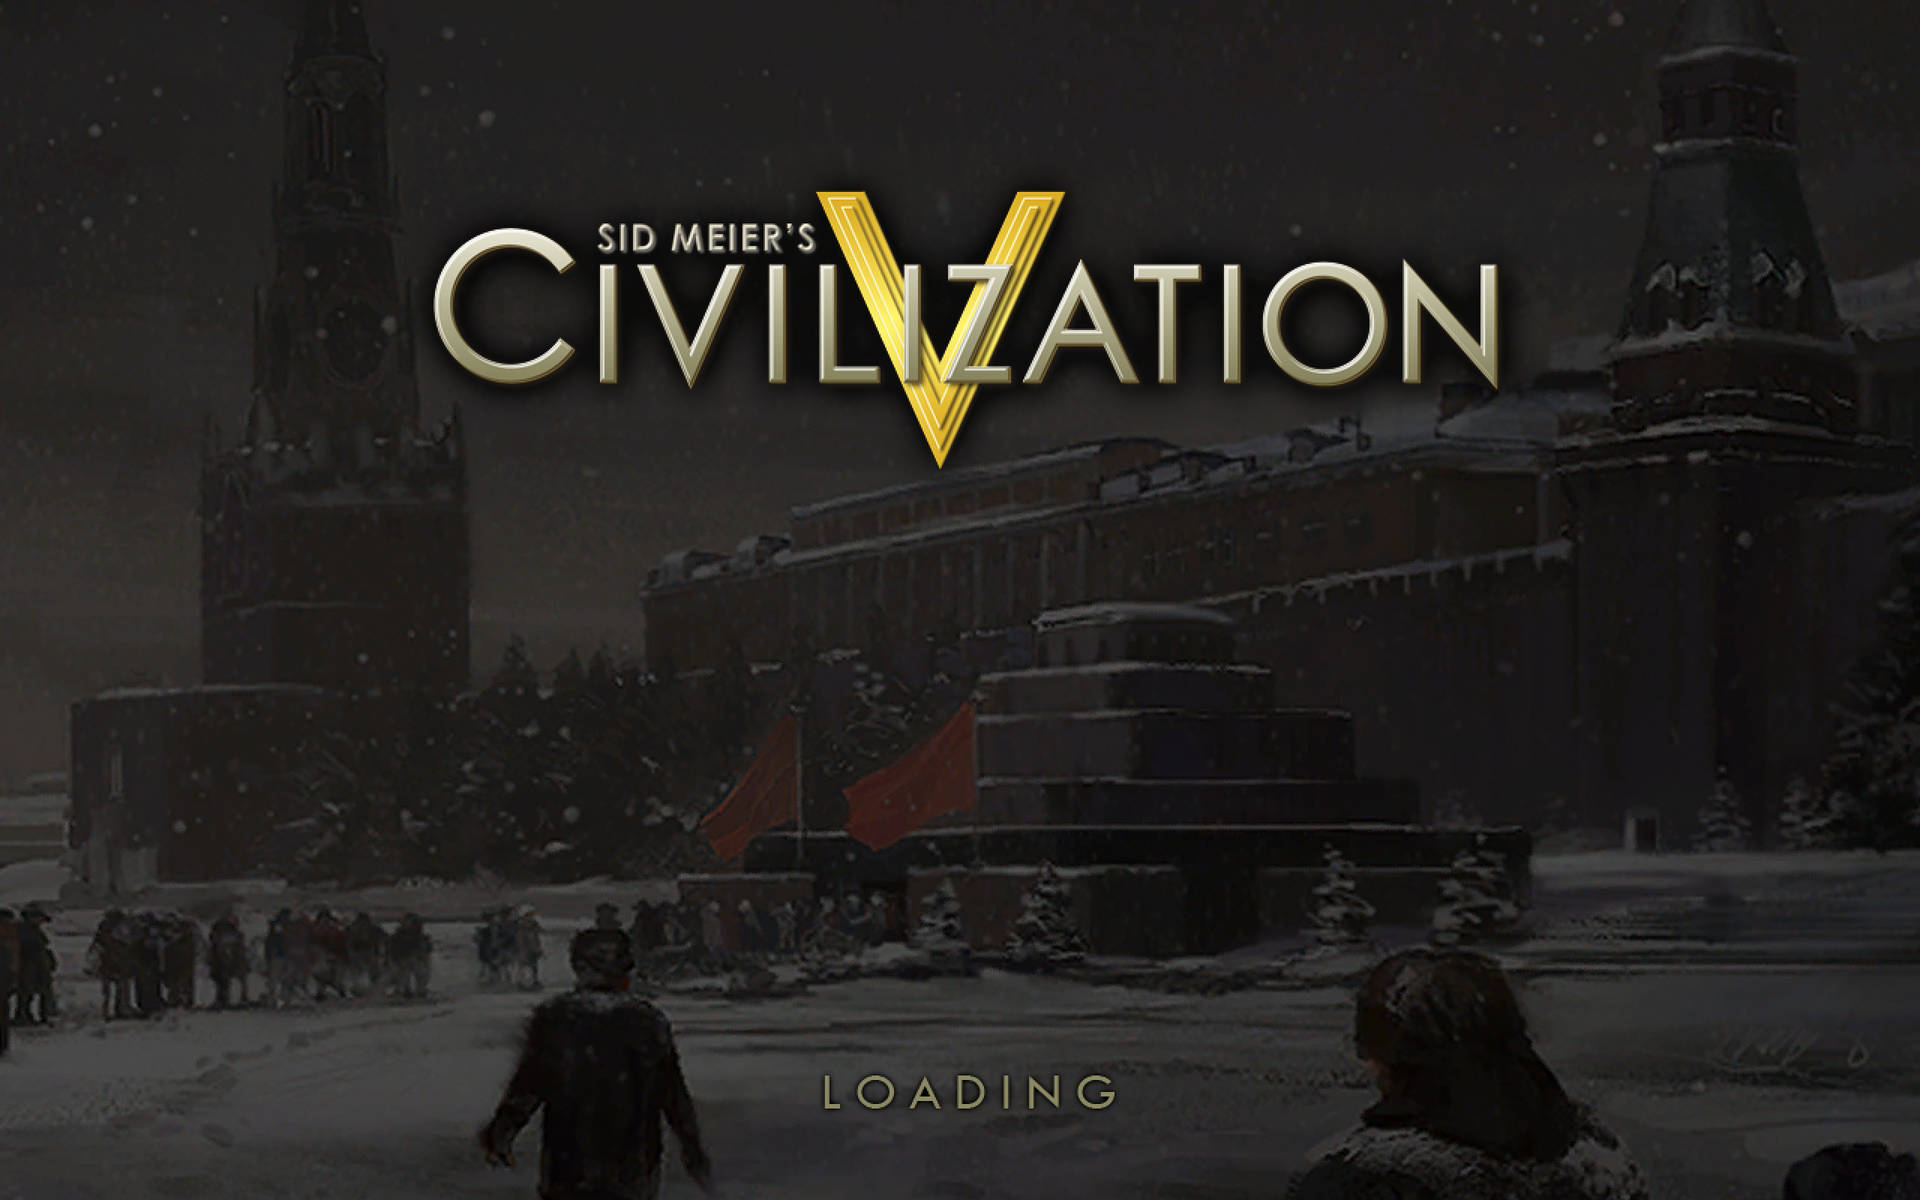 Loading Dark Civilization 5 Wallpaper